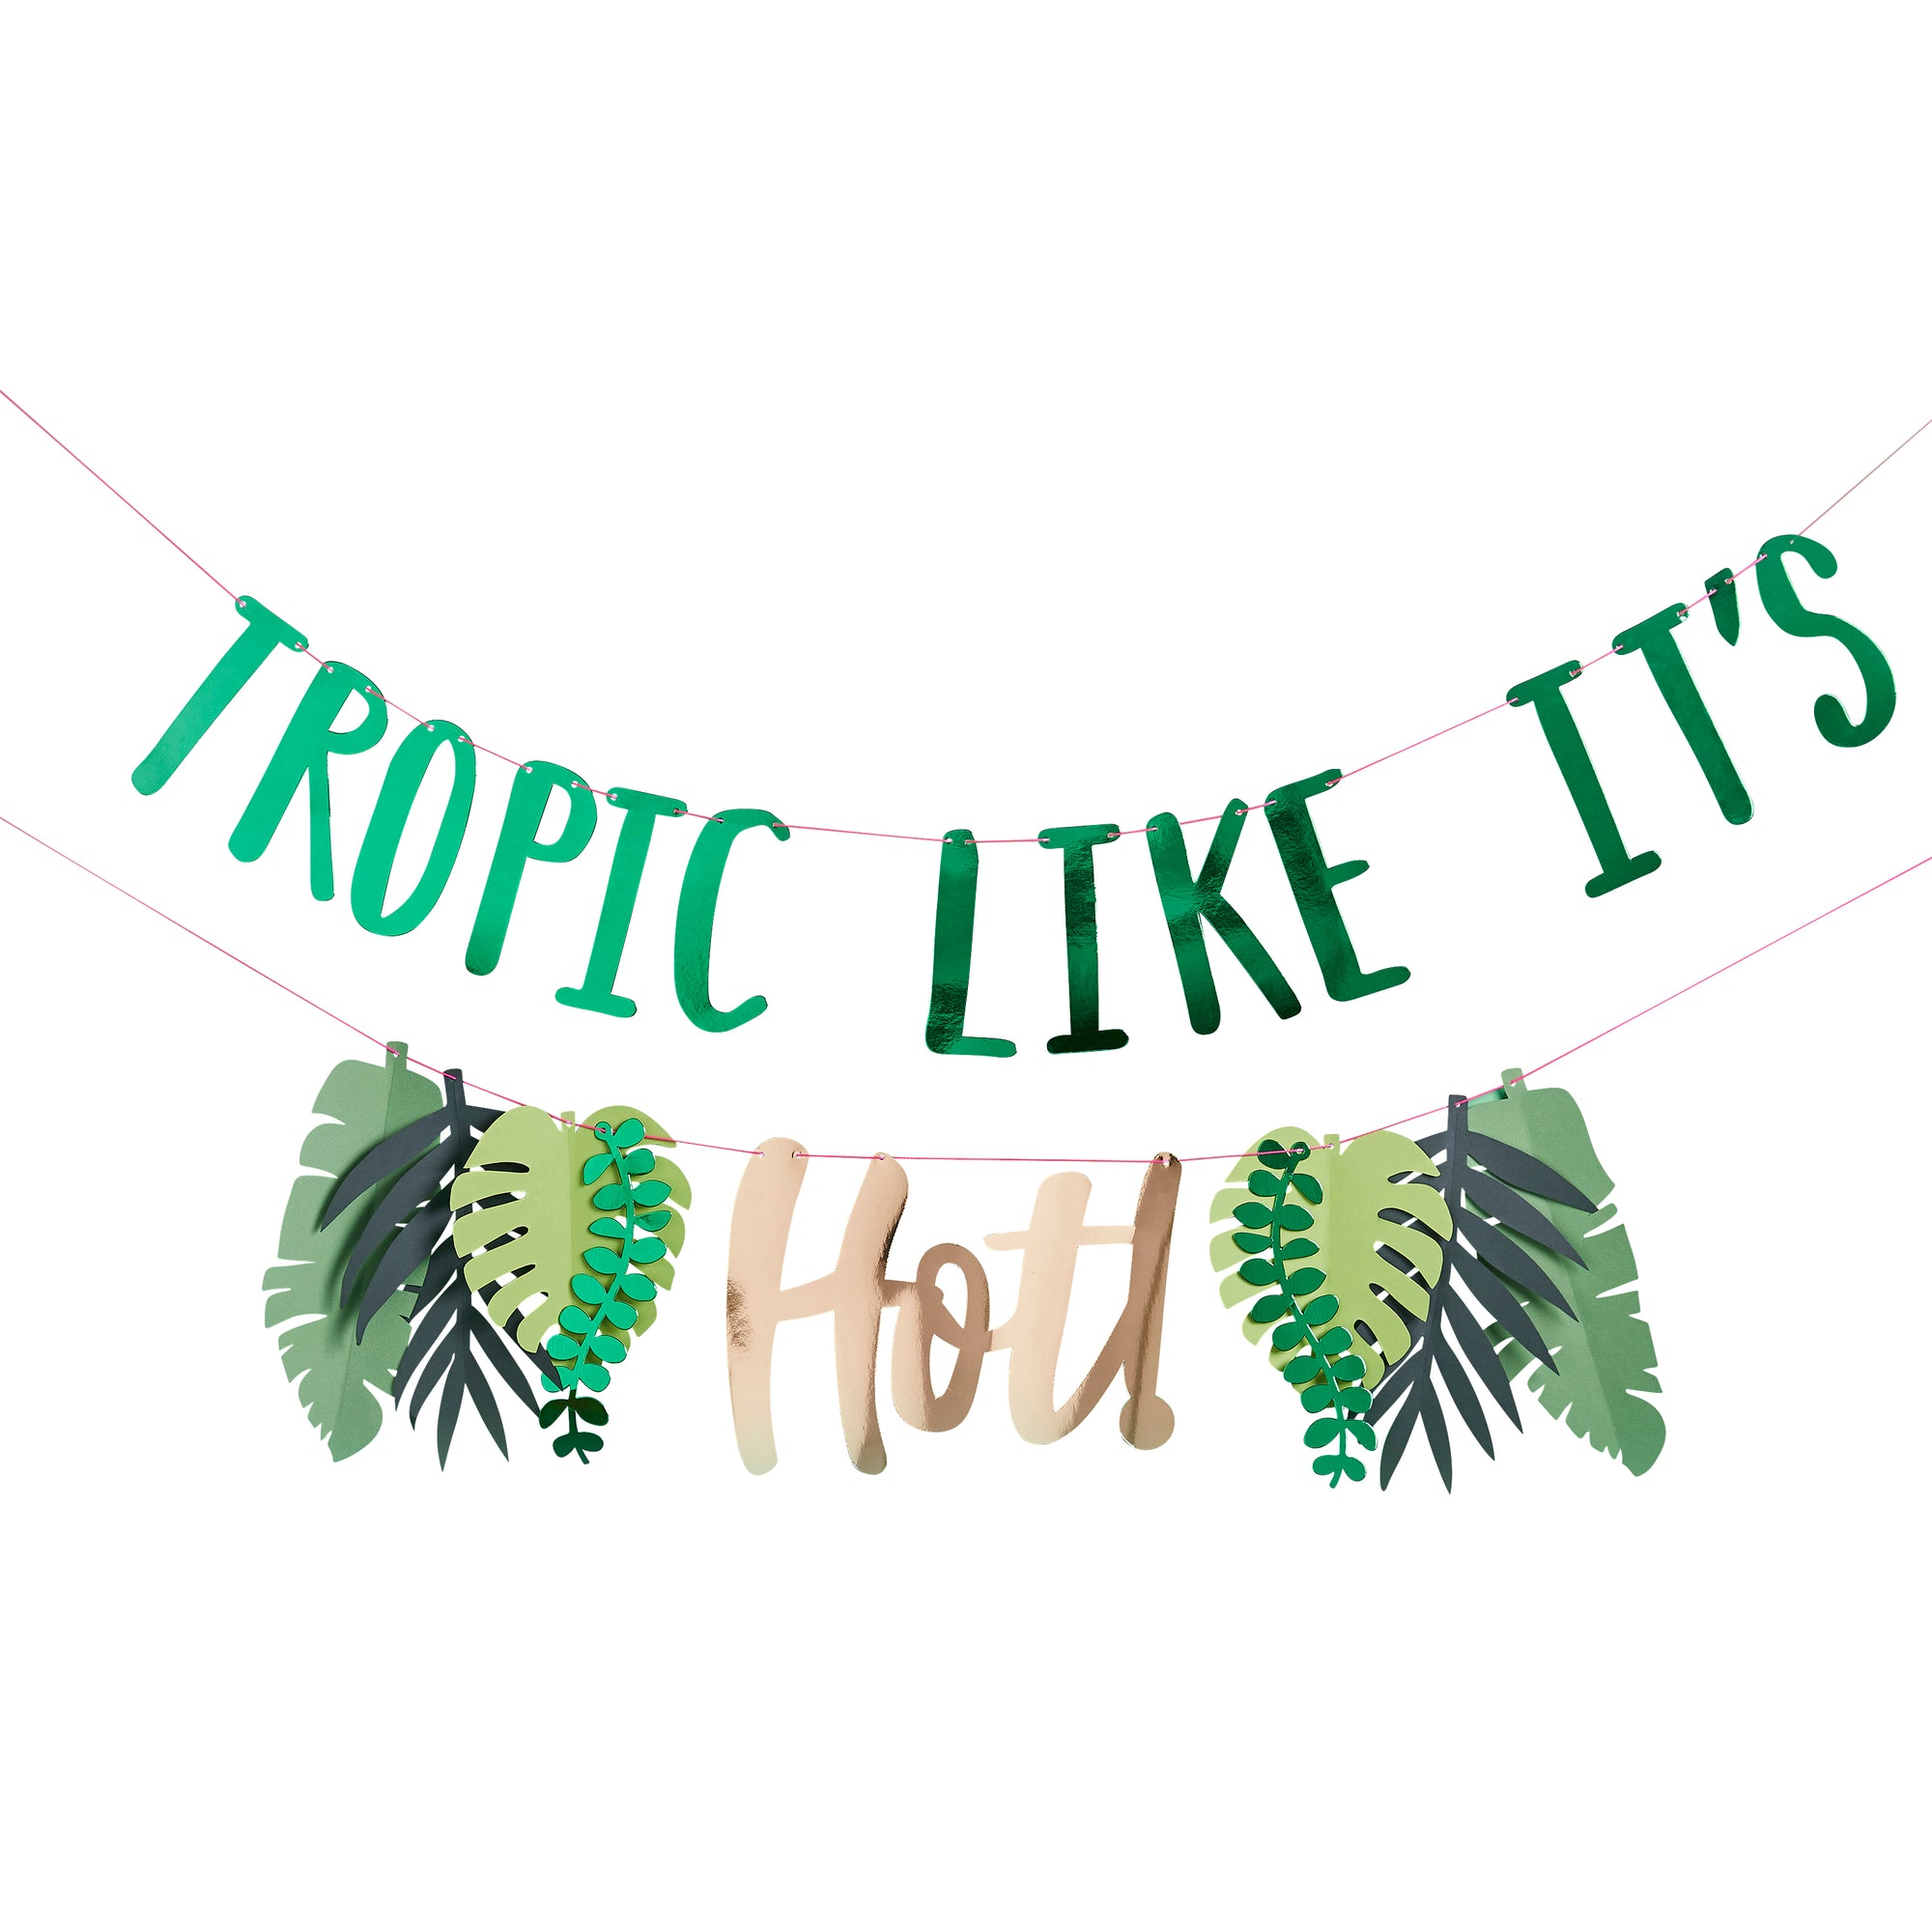 Tropic Like it's Hot Banner